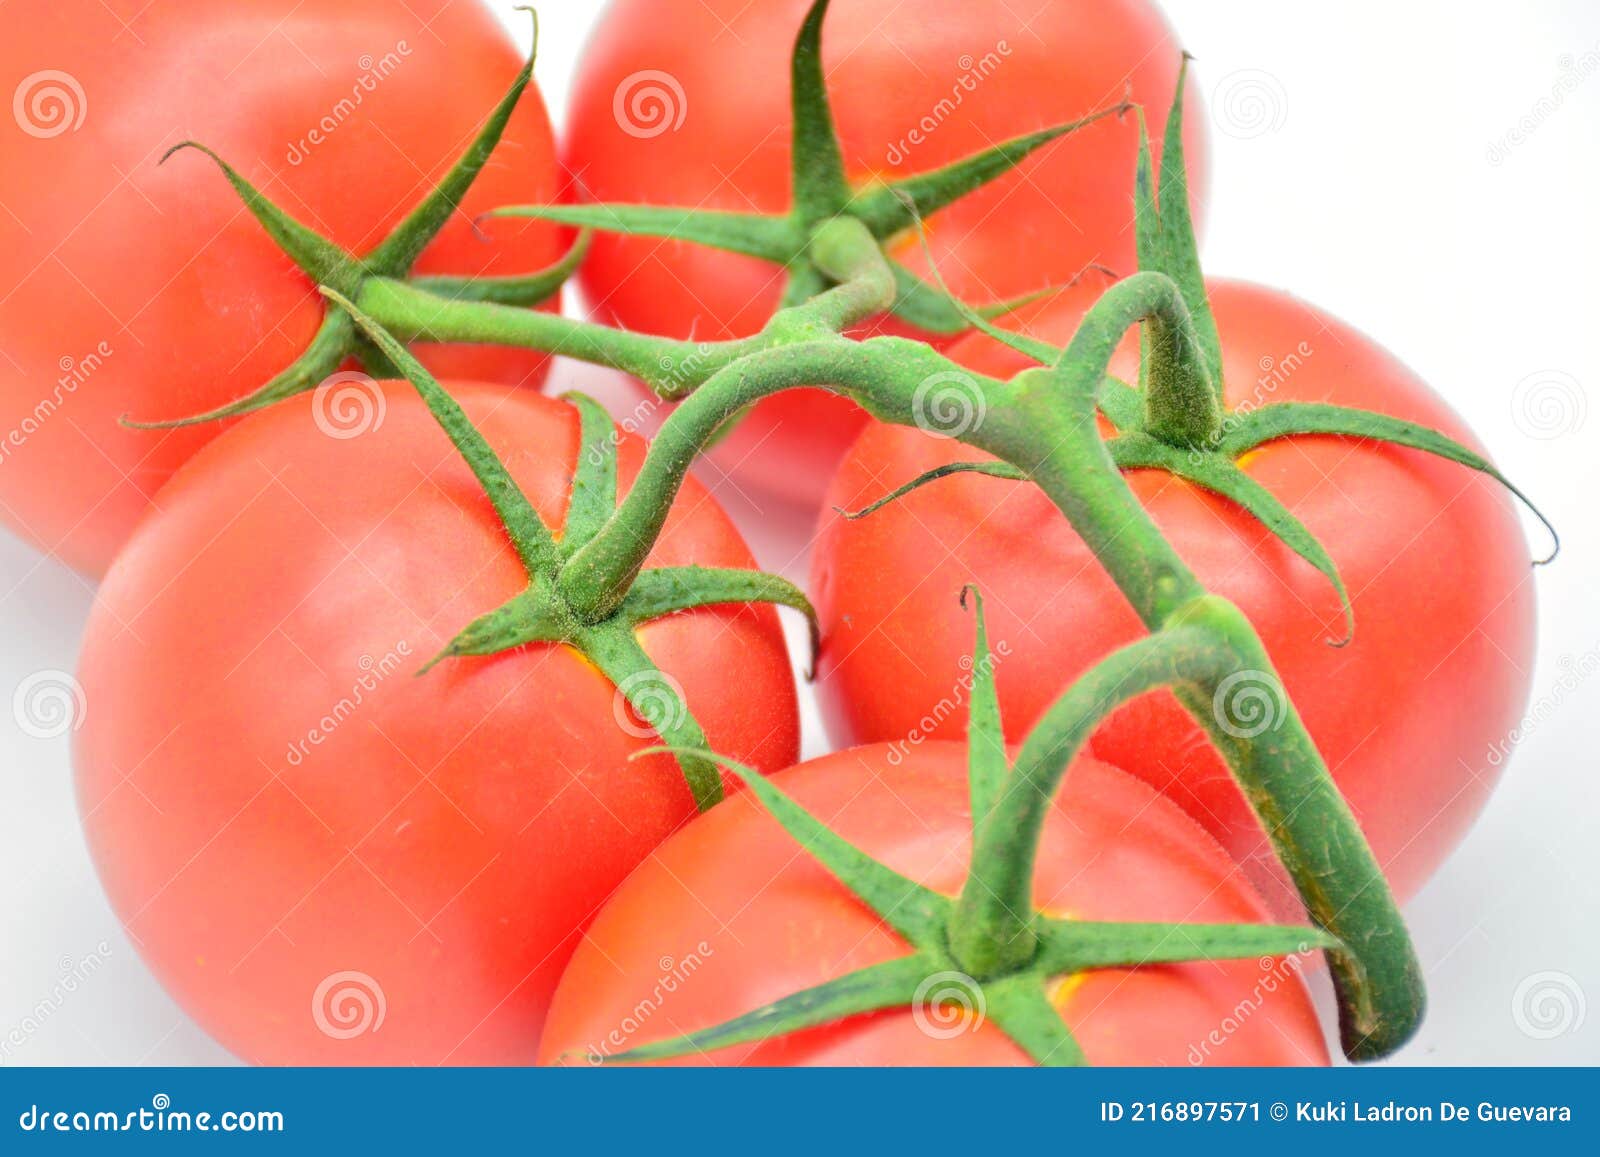 freshly cut vine tomatoes